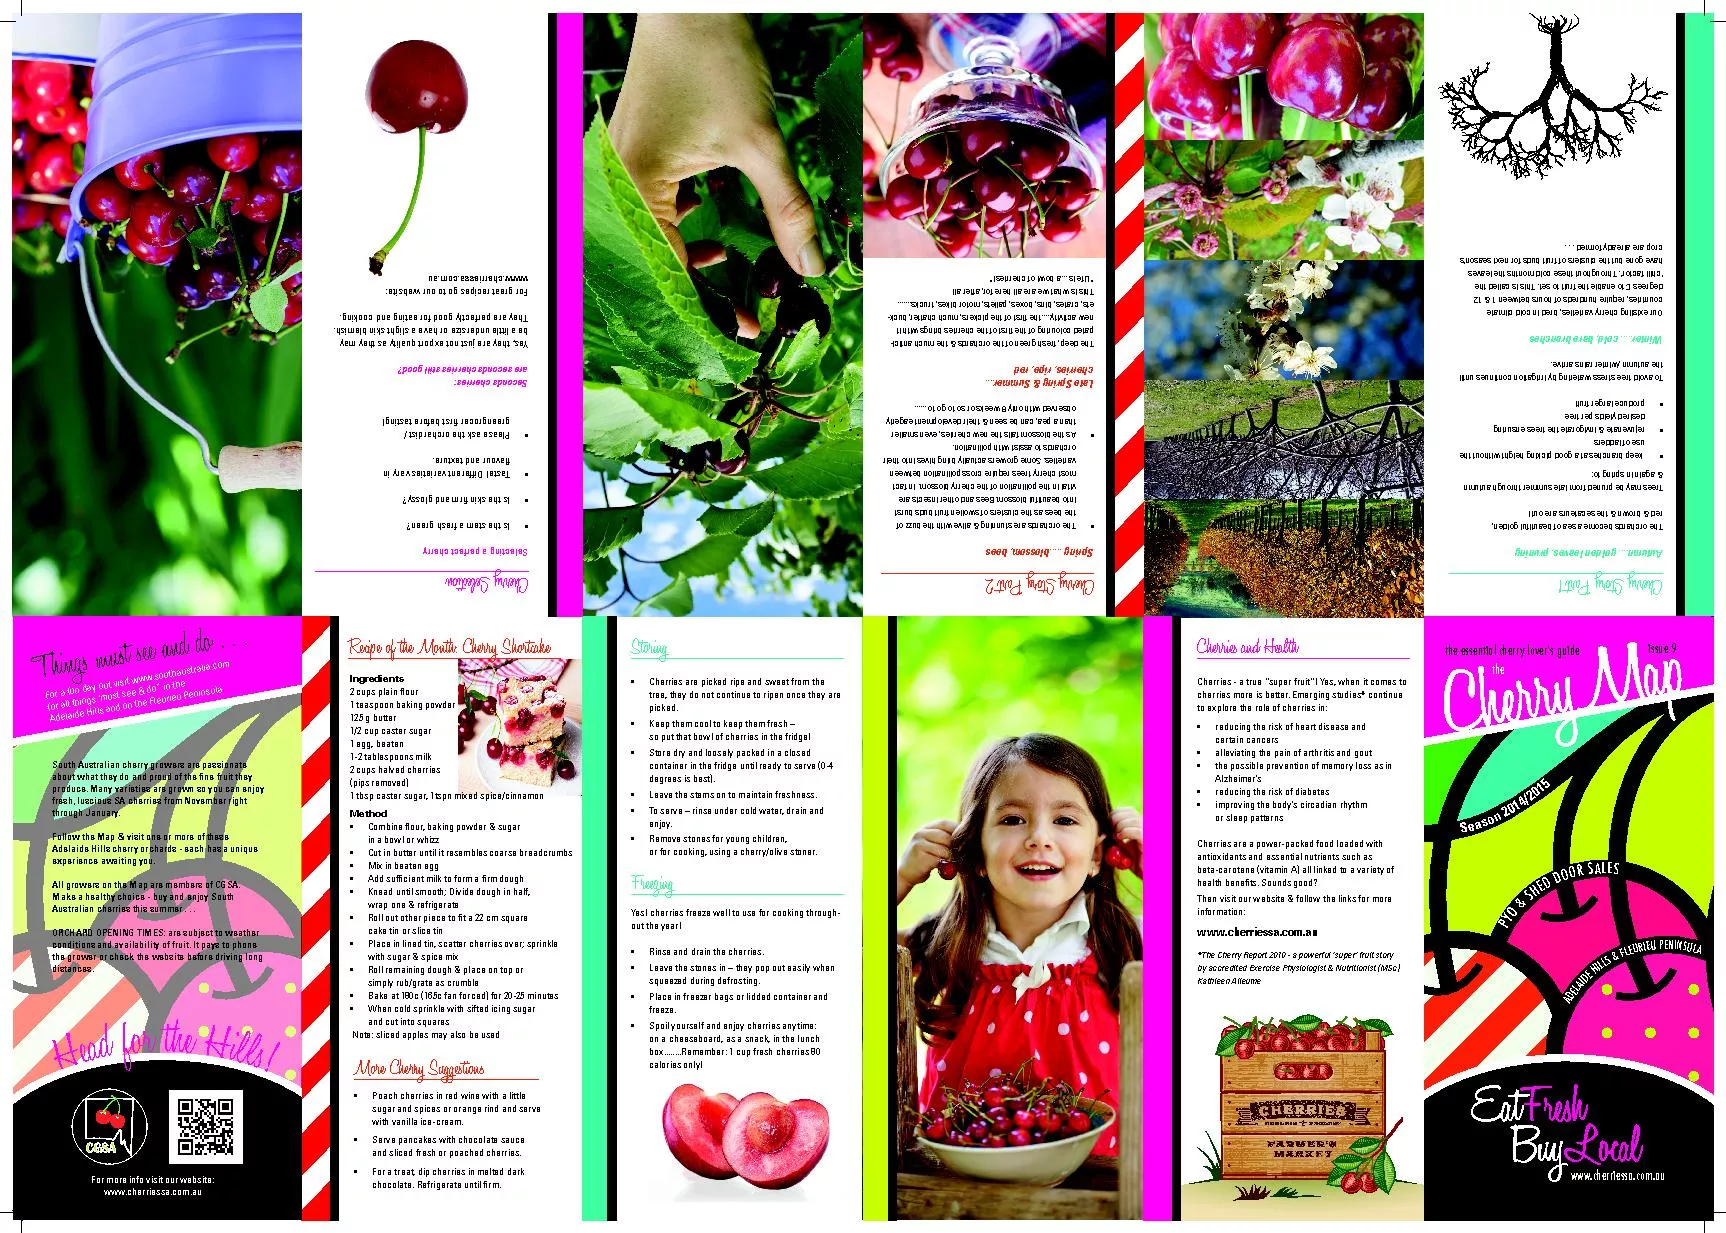 www.cherriessa.com.au the essential cherry lover’s guide
...